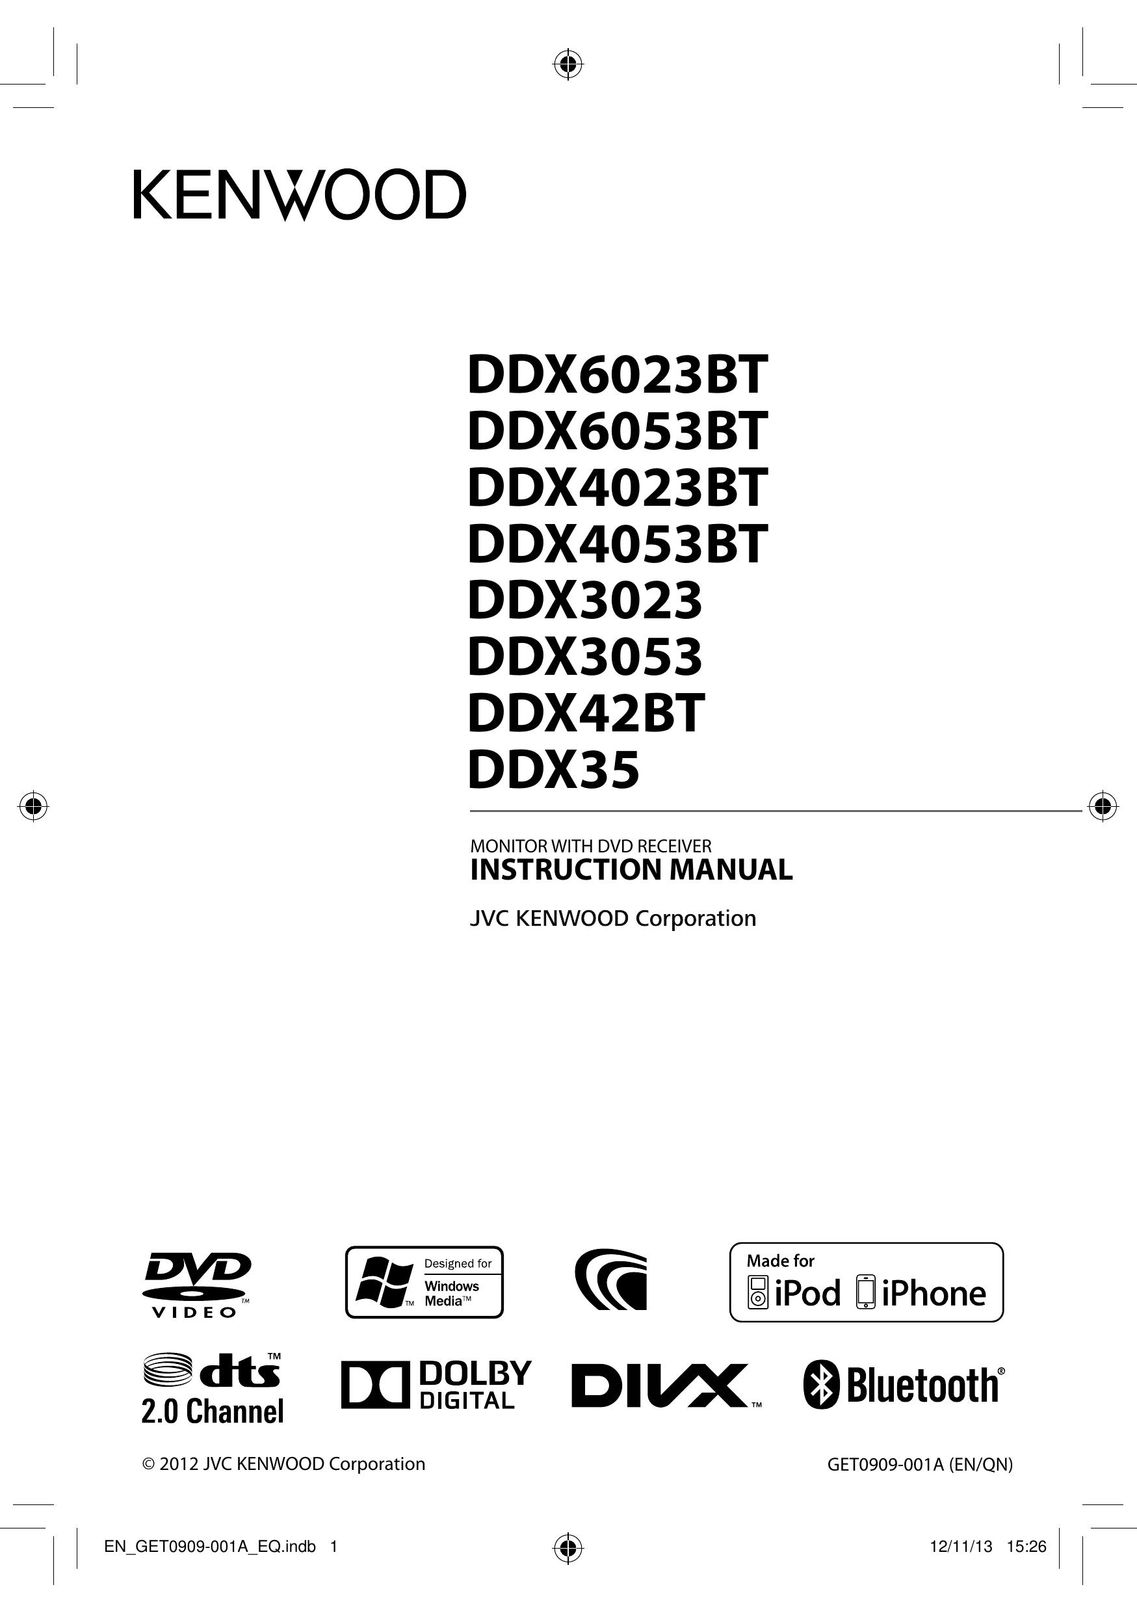 Kenwood DDX3023 Car Video System User Manual